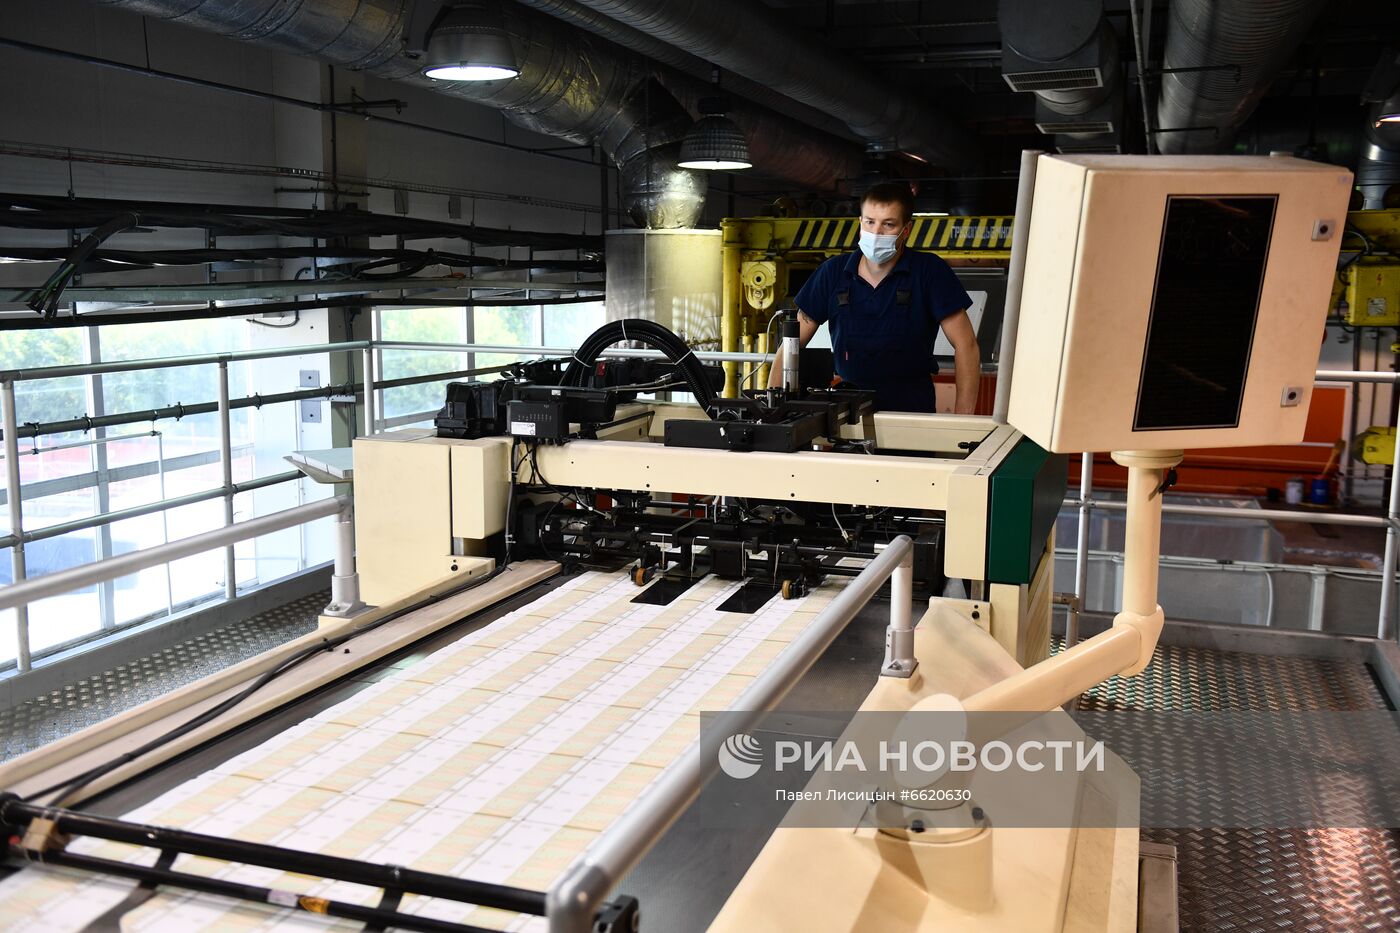 Пермская печатная фабрика АО "Гознак"